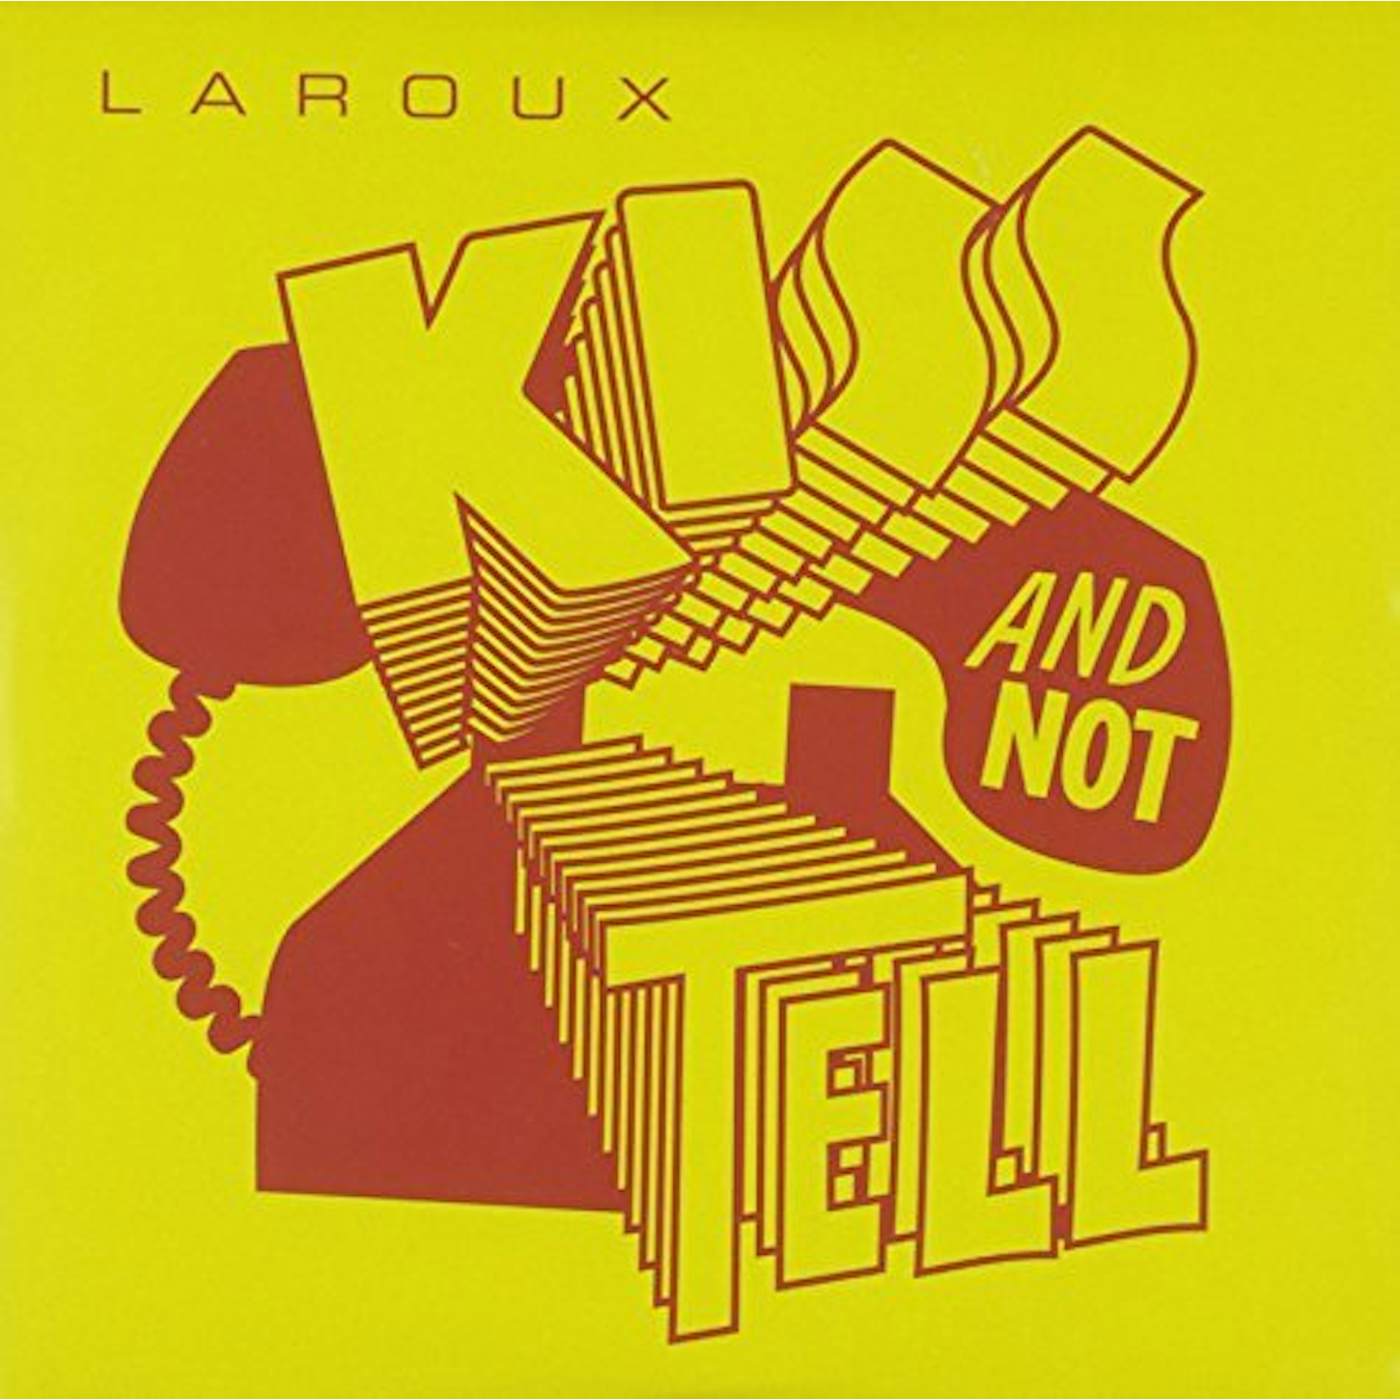 La Roux Kiss And Not Tell Vinyl Record